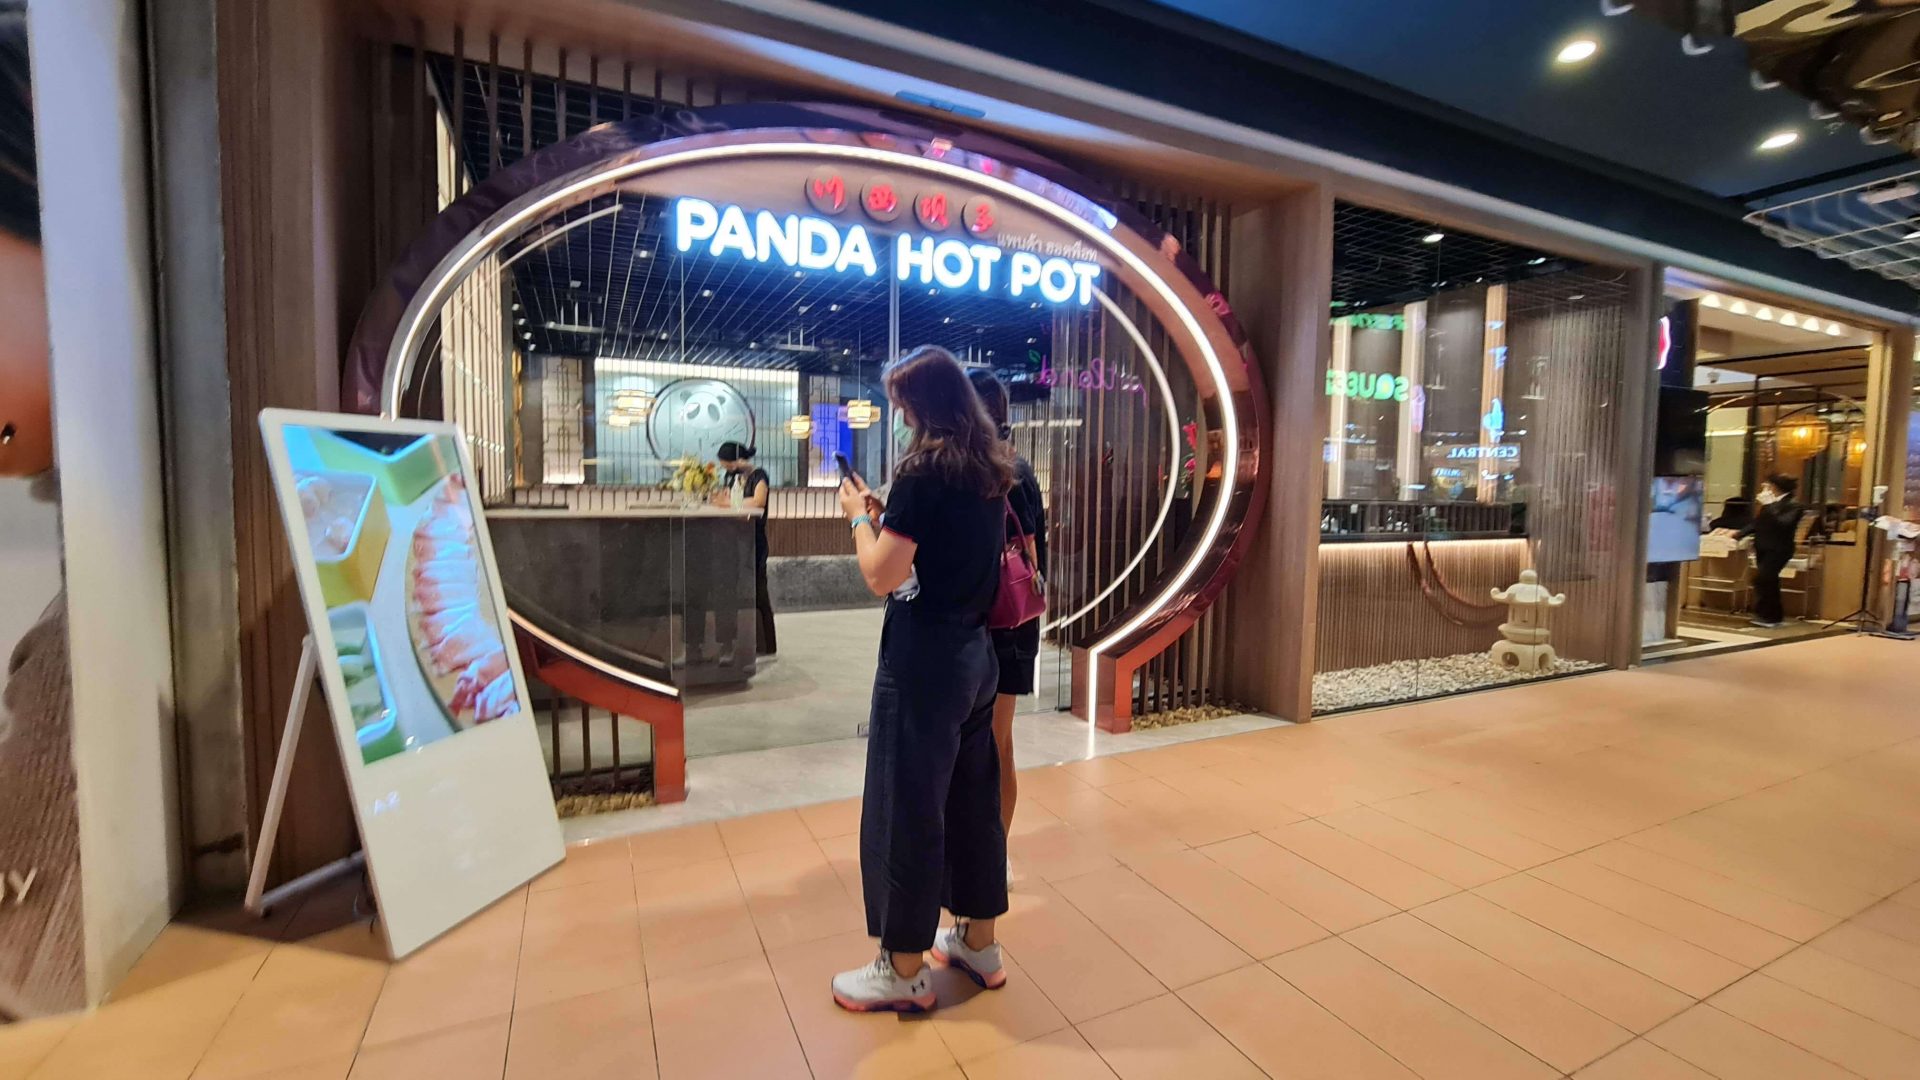 Panda hot pot digital signage dsignage